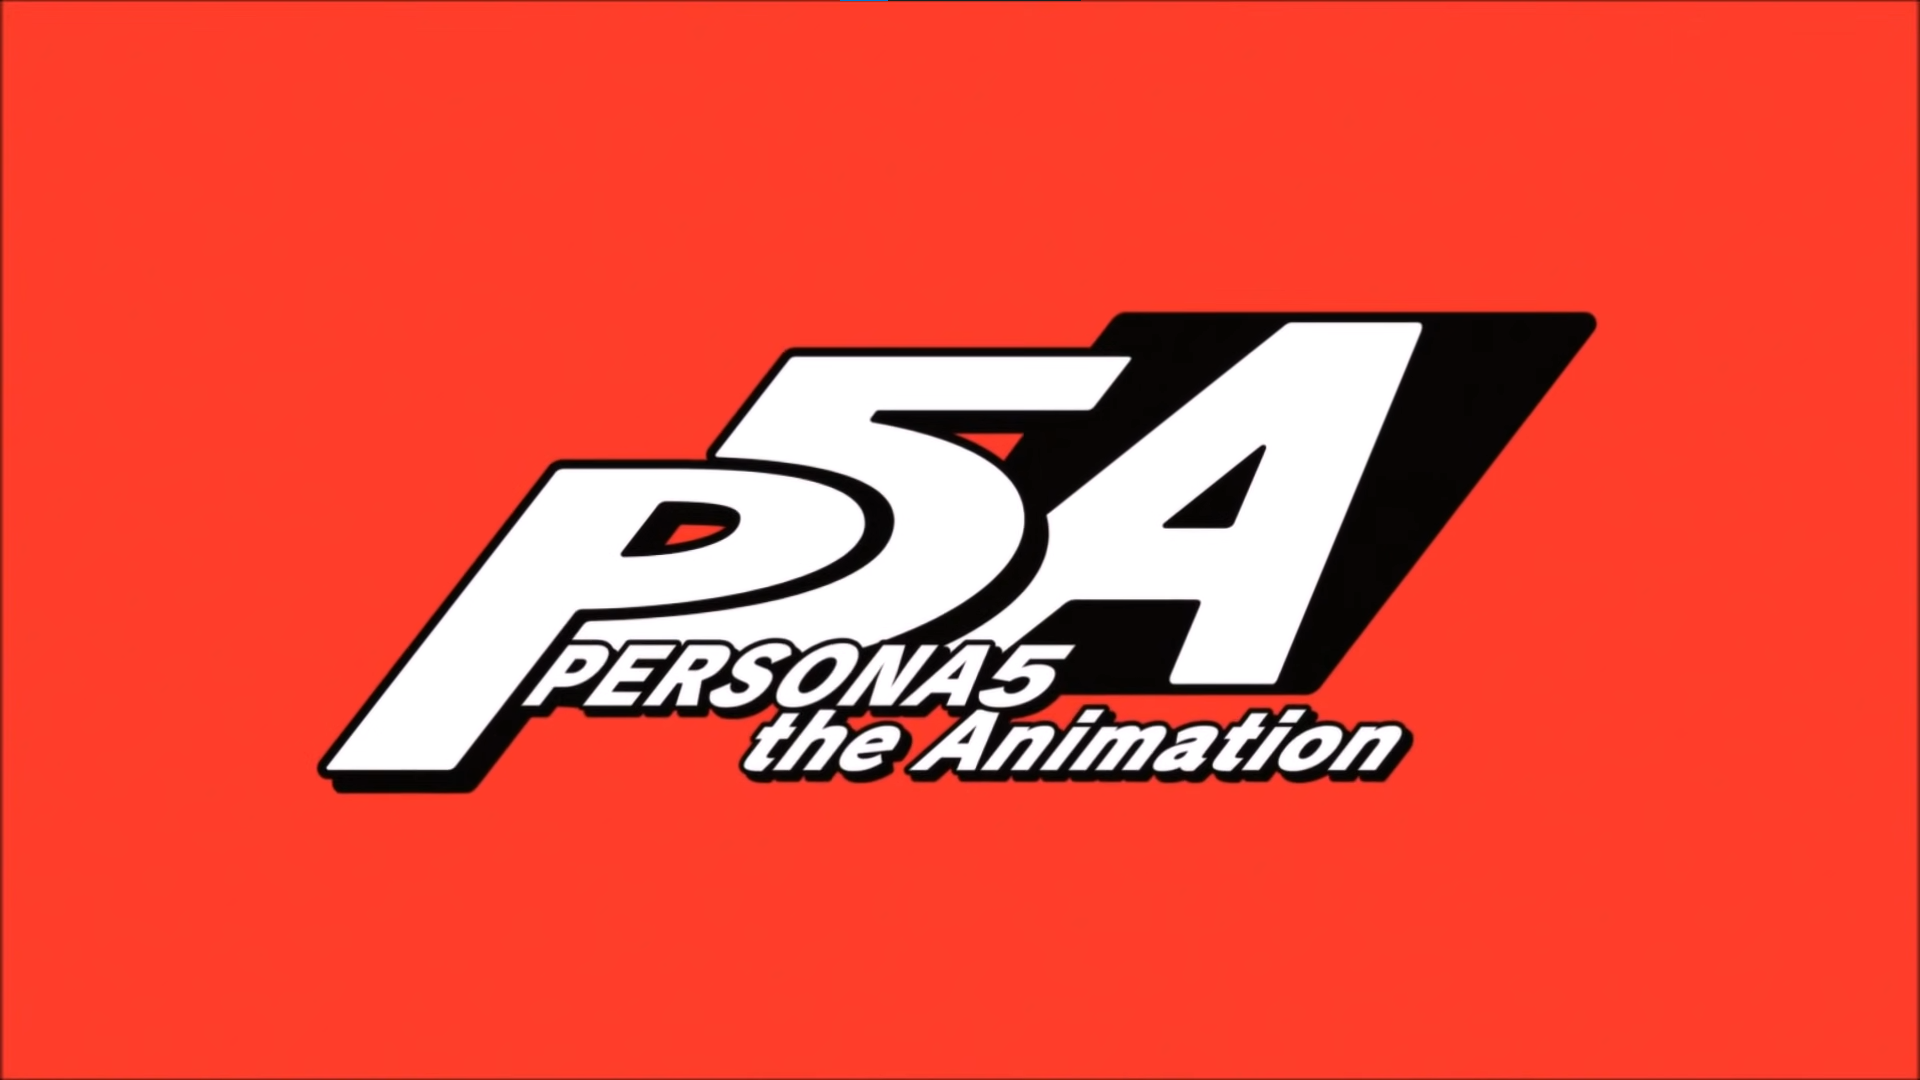 Persona 5: the Animation Logo